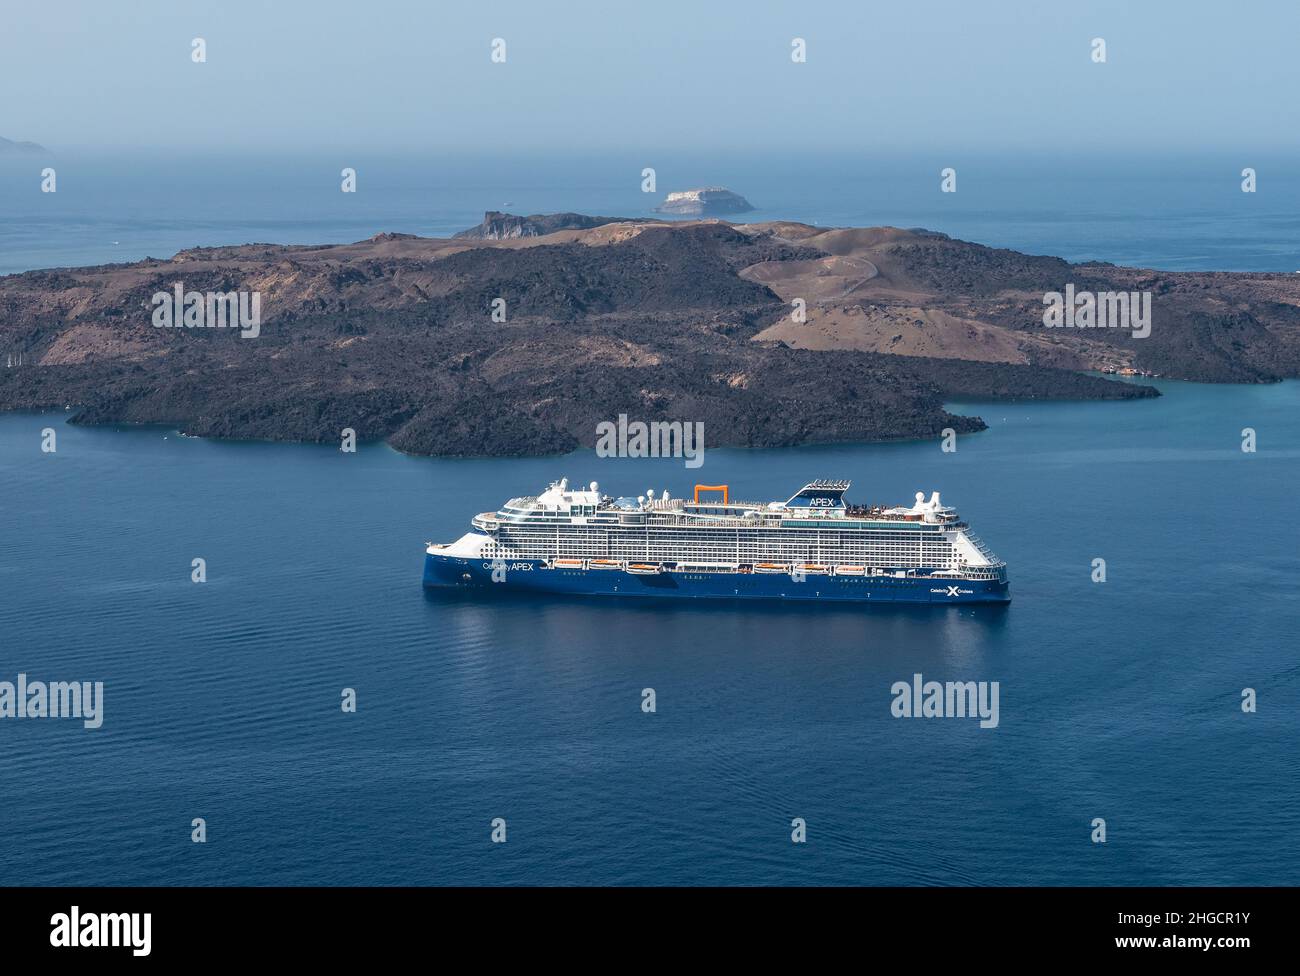 SANTORINI, GREECE - SEPTEMBER 19, 2021: Cruise ship Apex Celebrity Cruises anchored in harbor bay of Santorini Island, Greece. Stock Photo